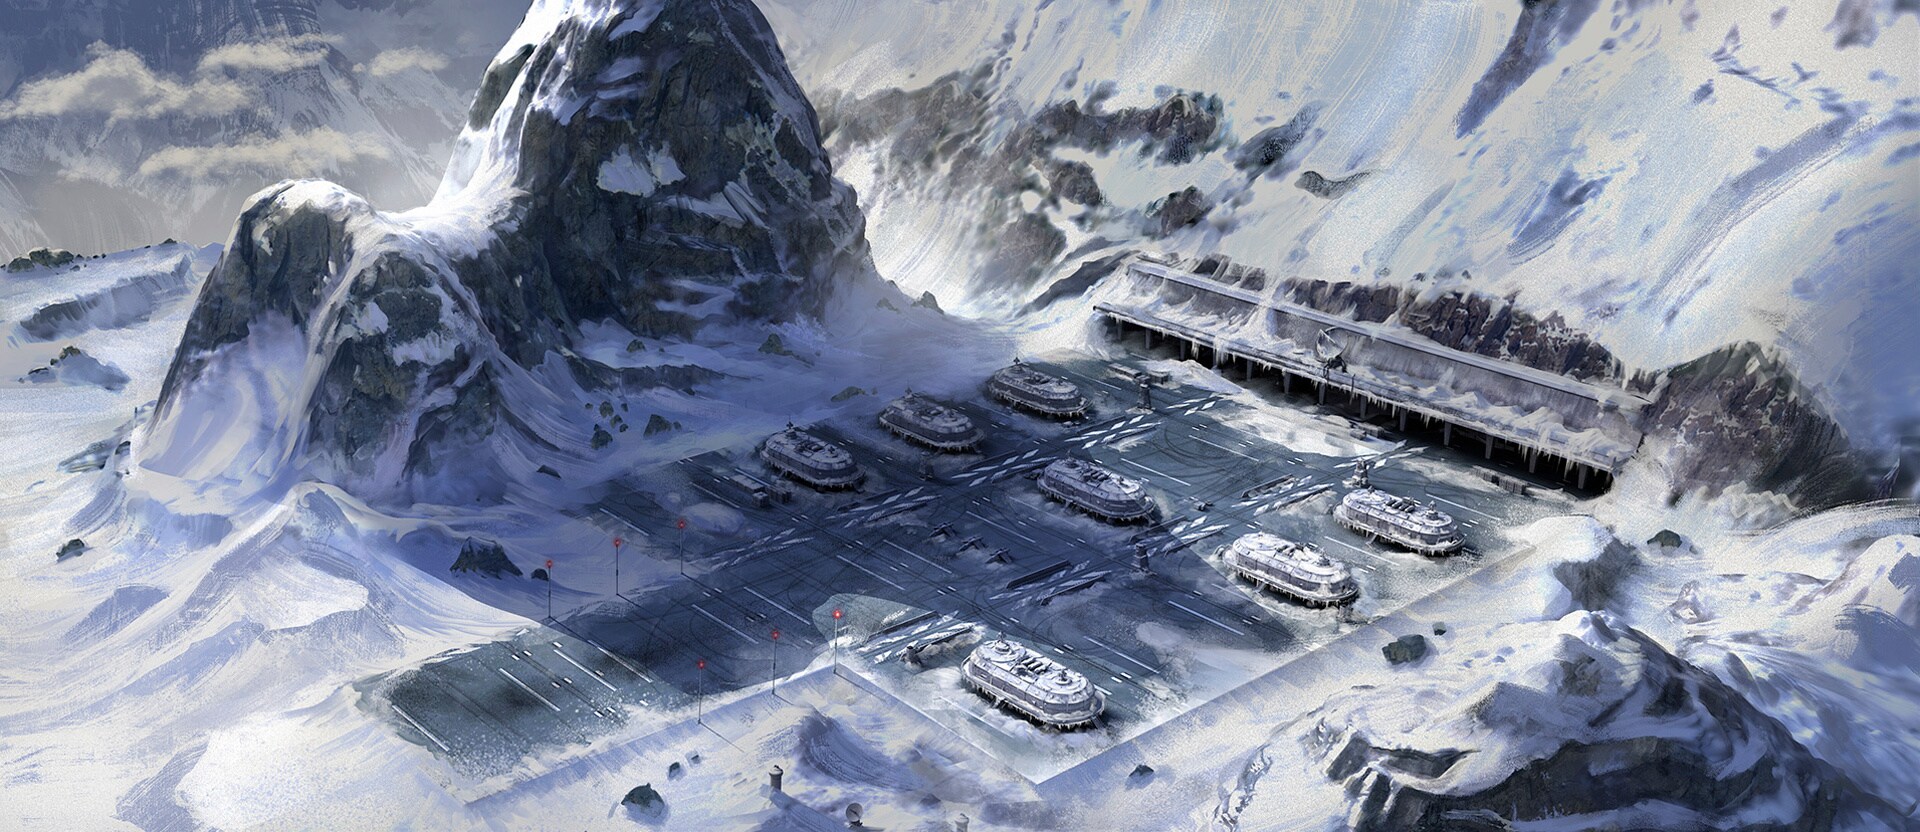 Barton 4 Imperial outpost concept art by Scott Zenteno